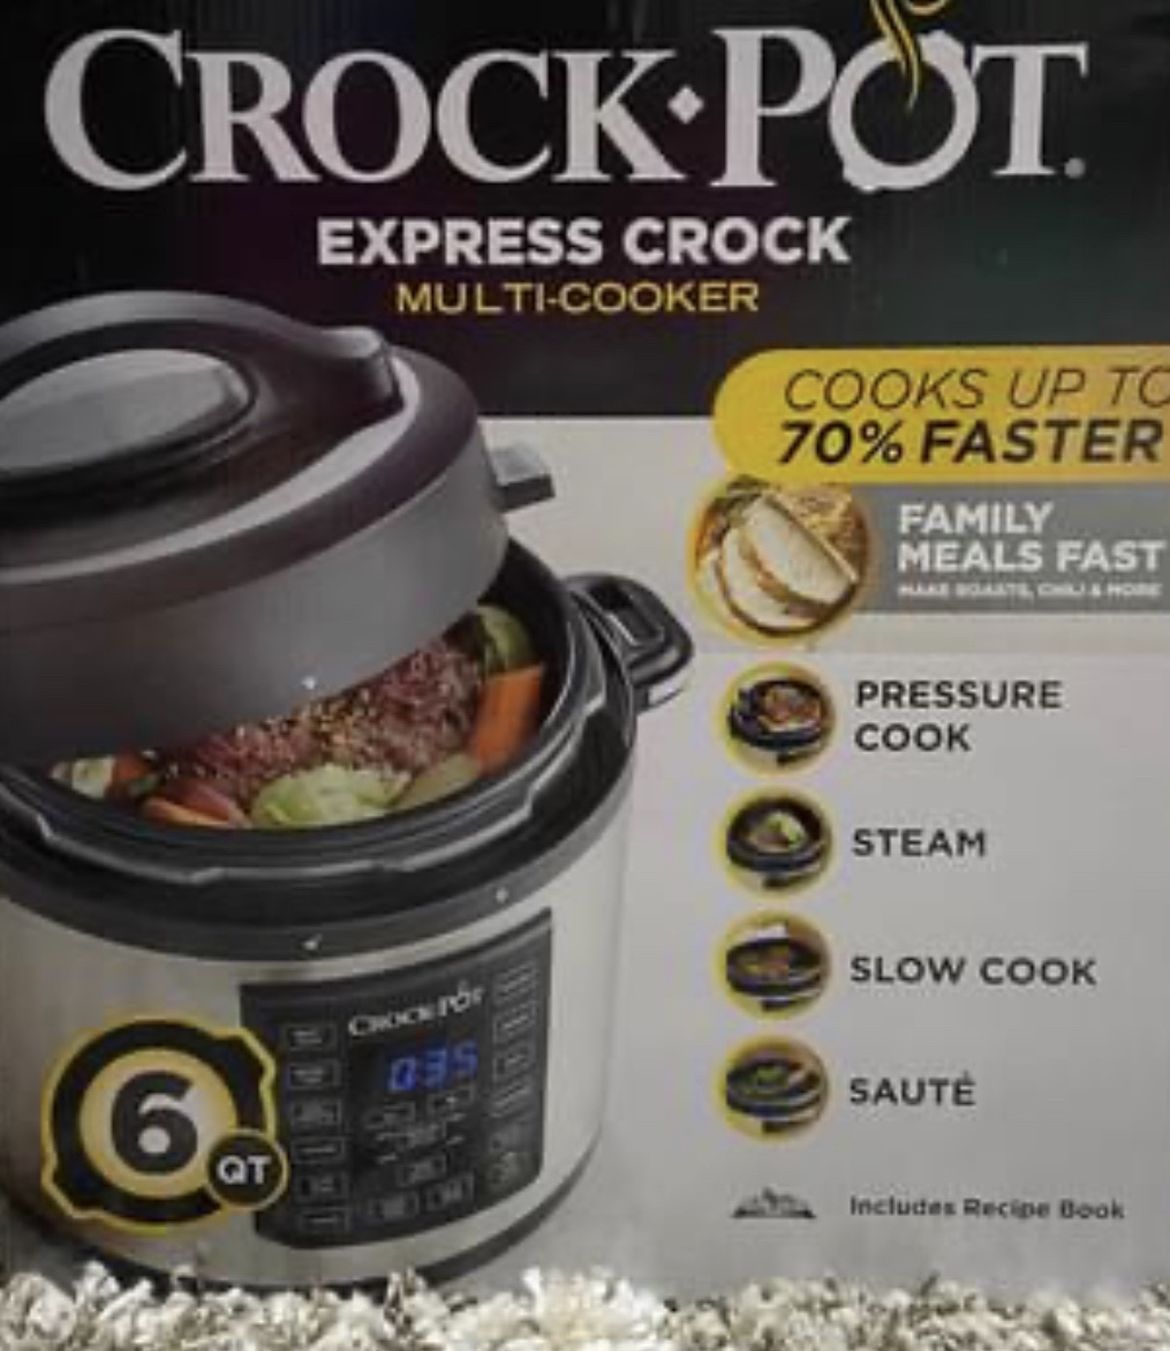 Crock Pot express crock multi cooker